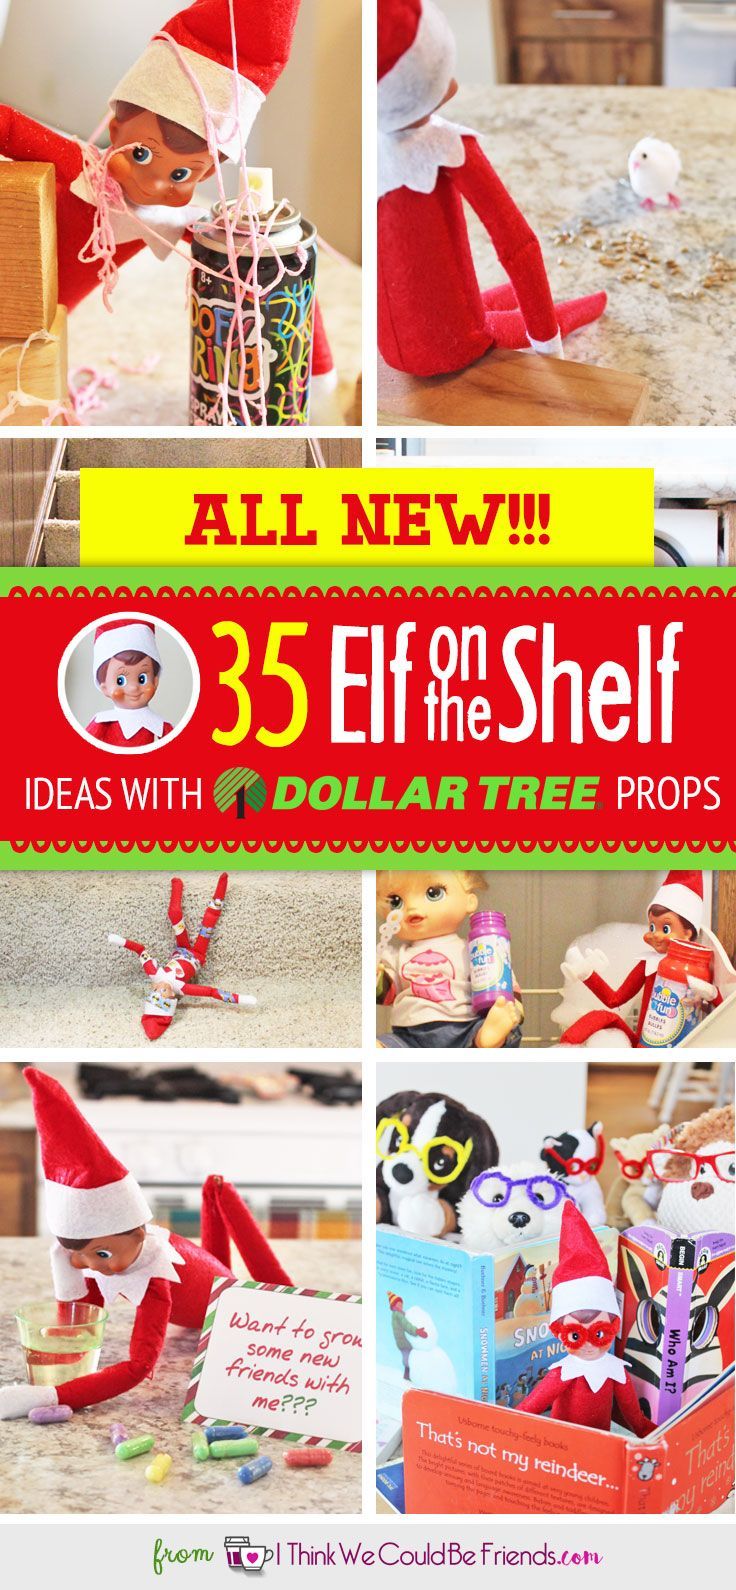 19 elf on the shelf easy ideas